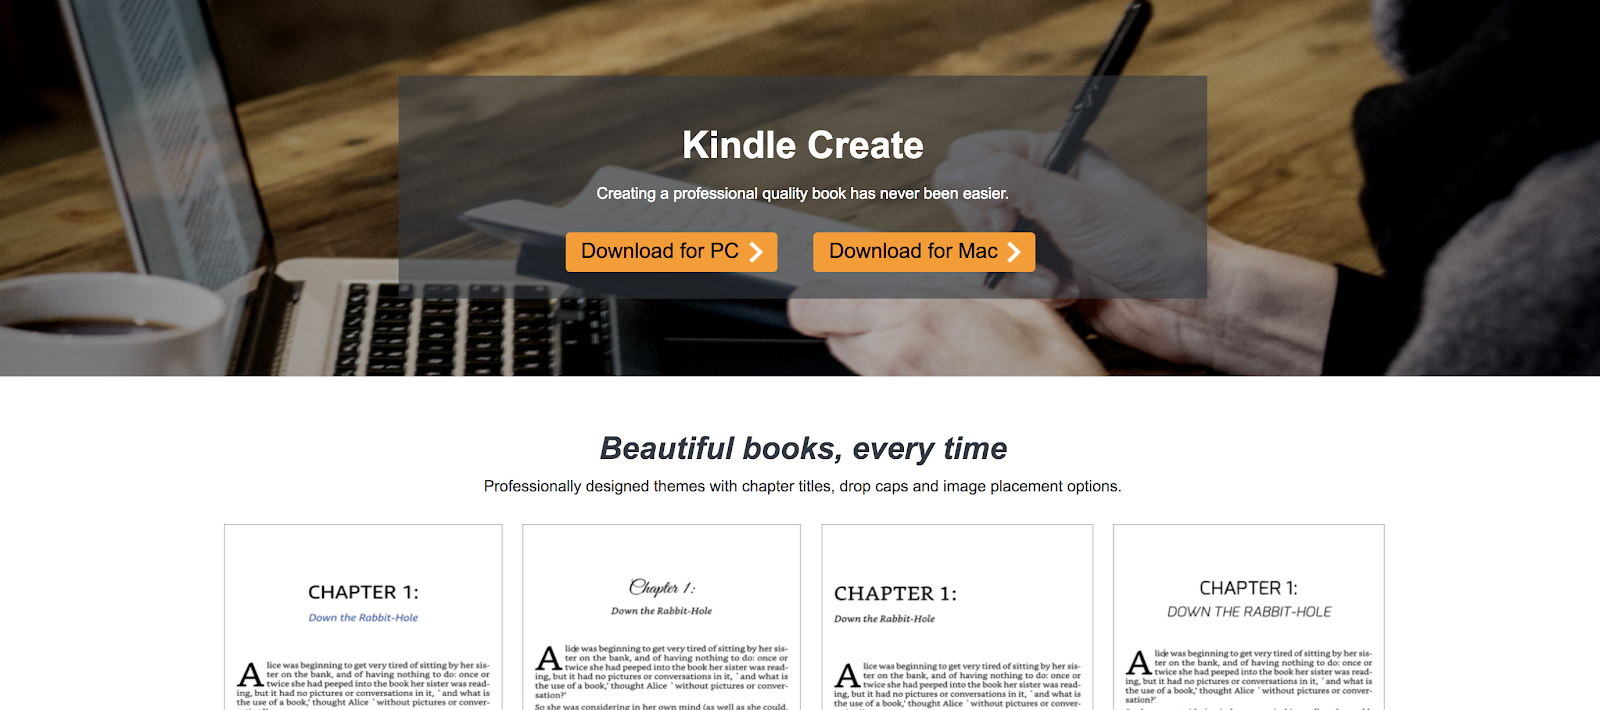 Amazon Kindle Create (eBook Publishing) Screenshot of Instructions